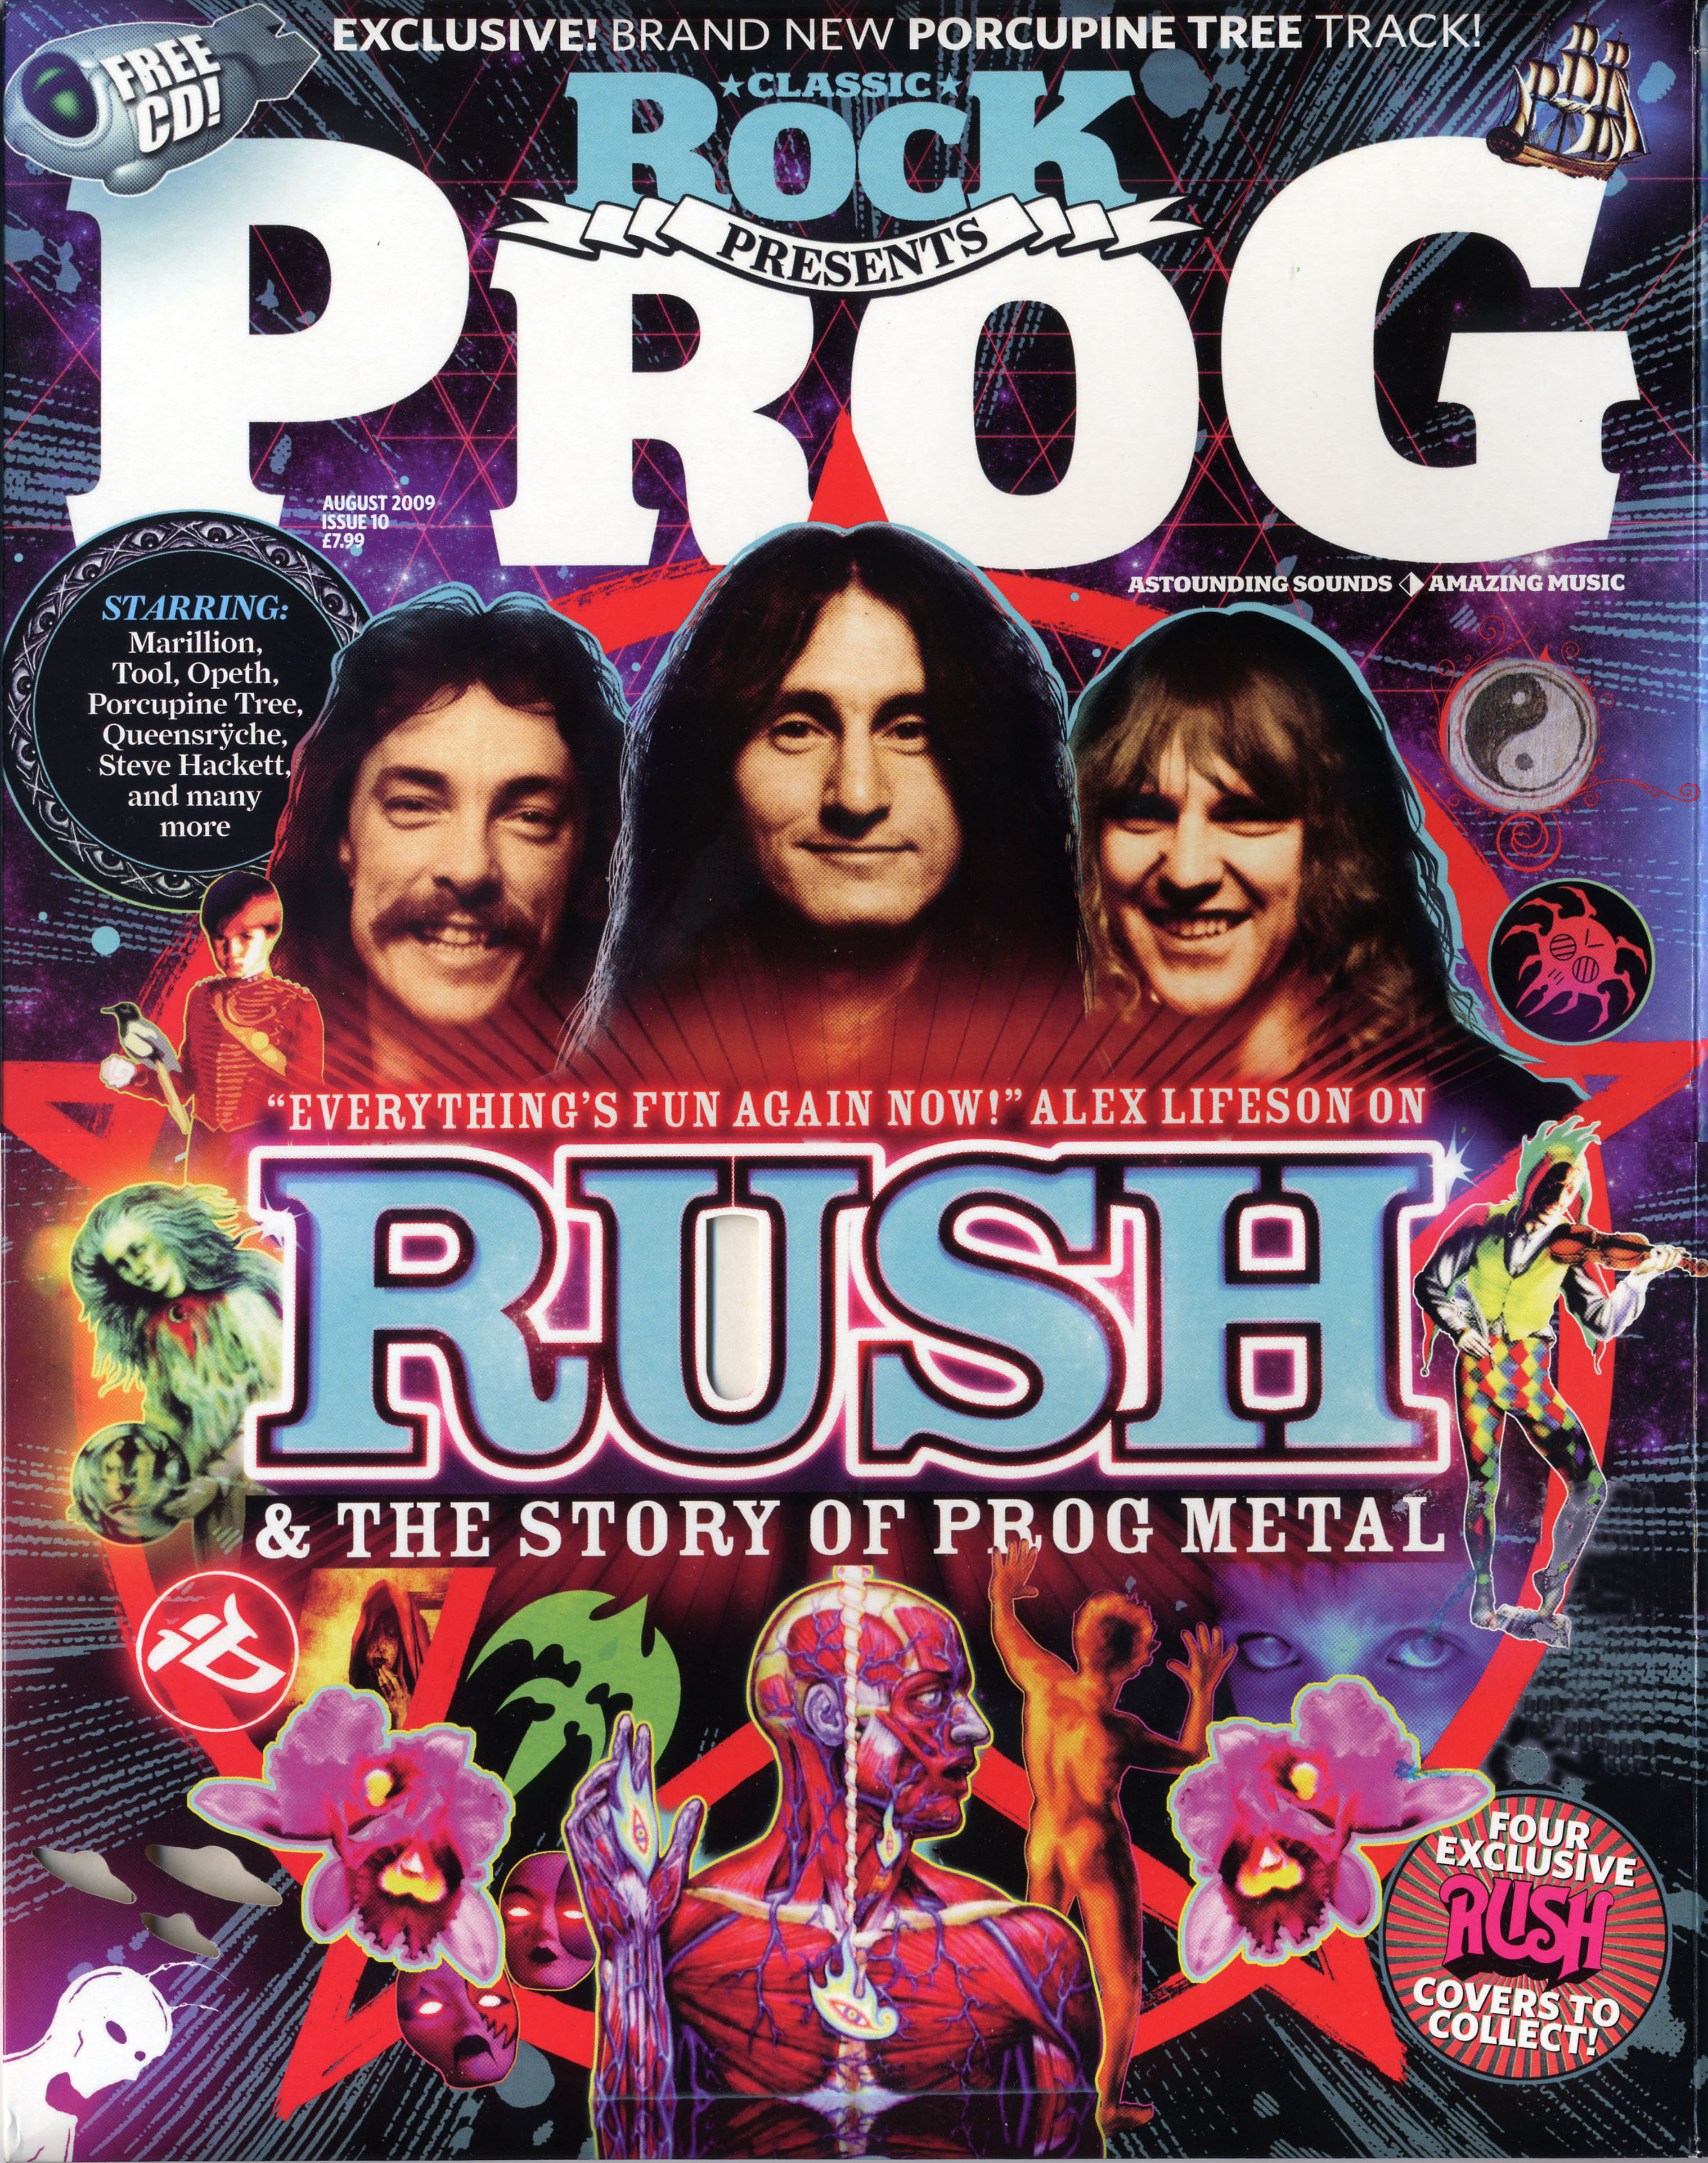 Rush Through Time - PROG Magazine - August 2009